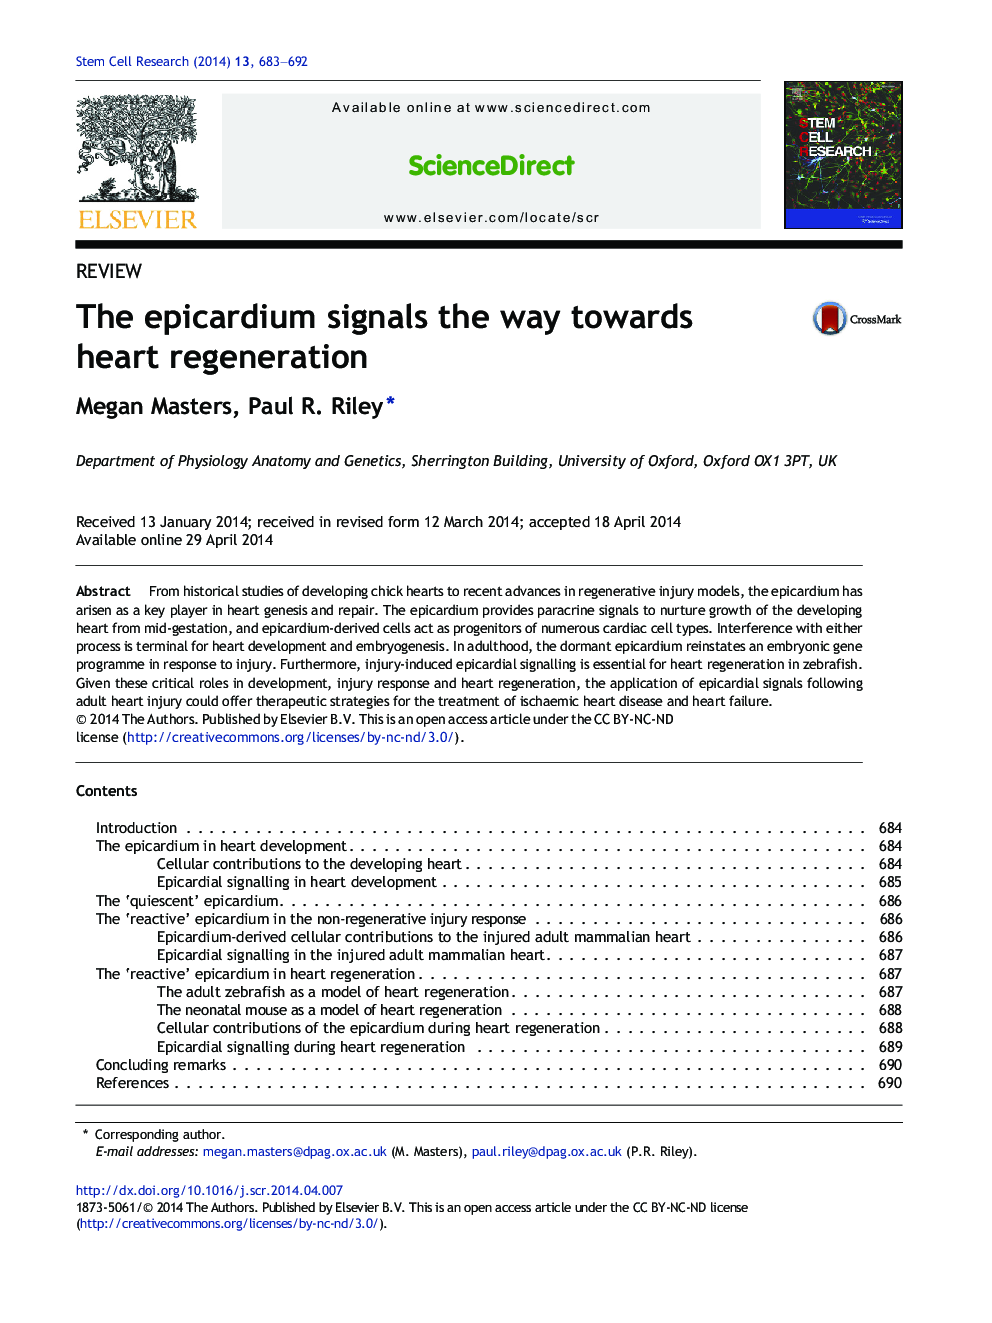 The epicardium signals the way towards heart regeneration